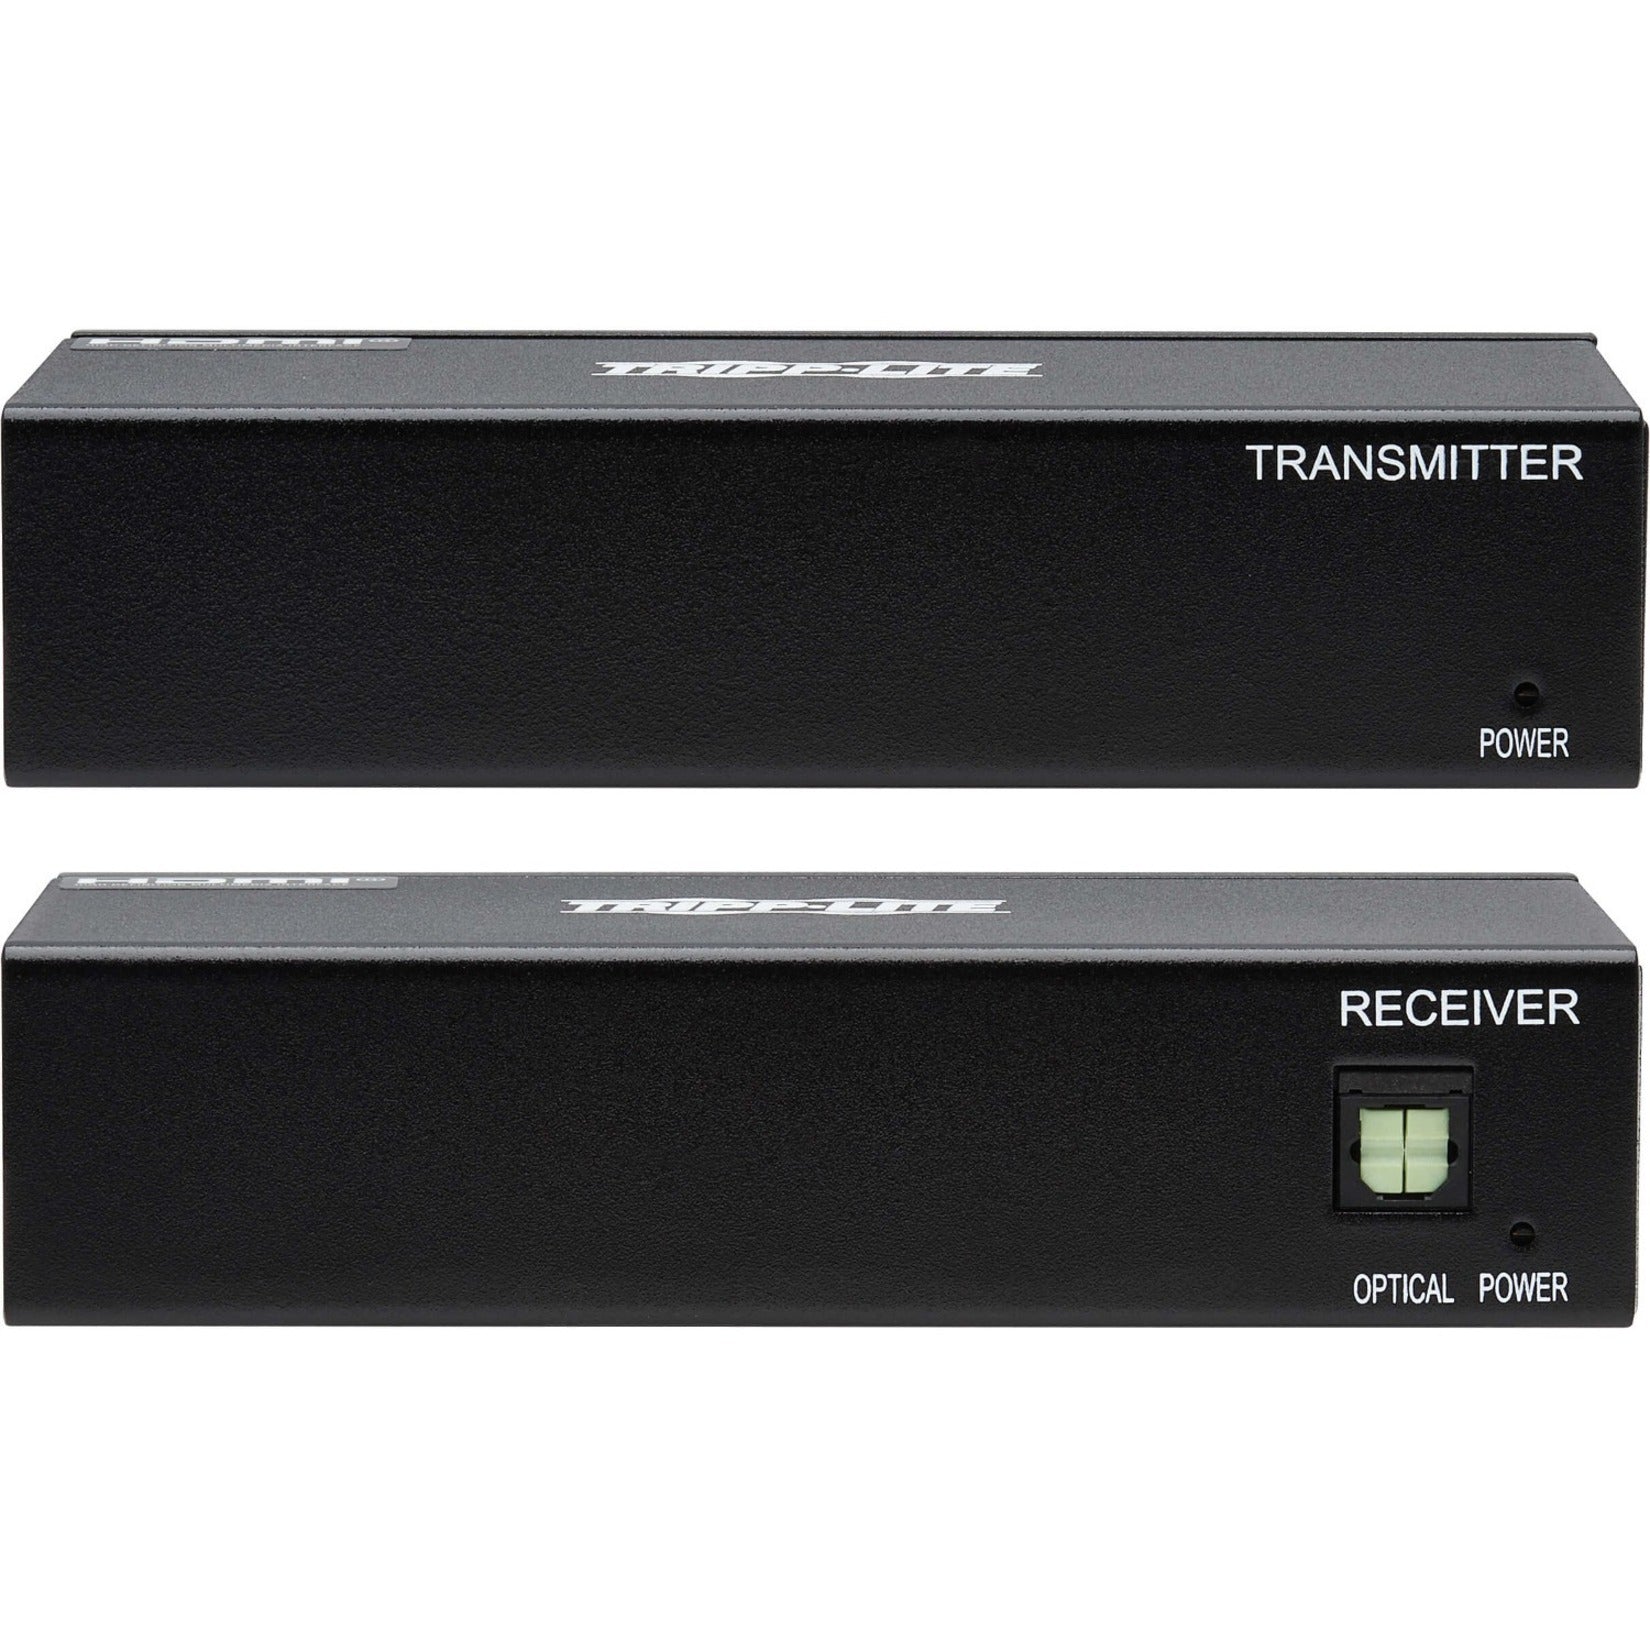 Tripp Lite B127A-2A1-BHBH Video Extender Transmitter/Receiver, 4K UHD, TAA Compliant, 1 Year Warranty